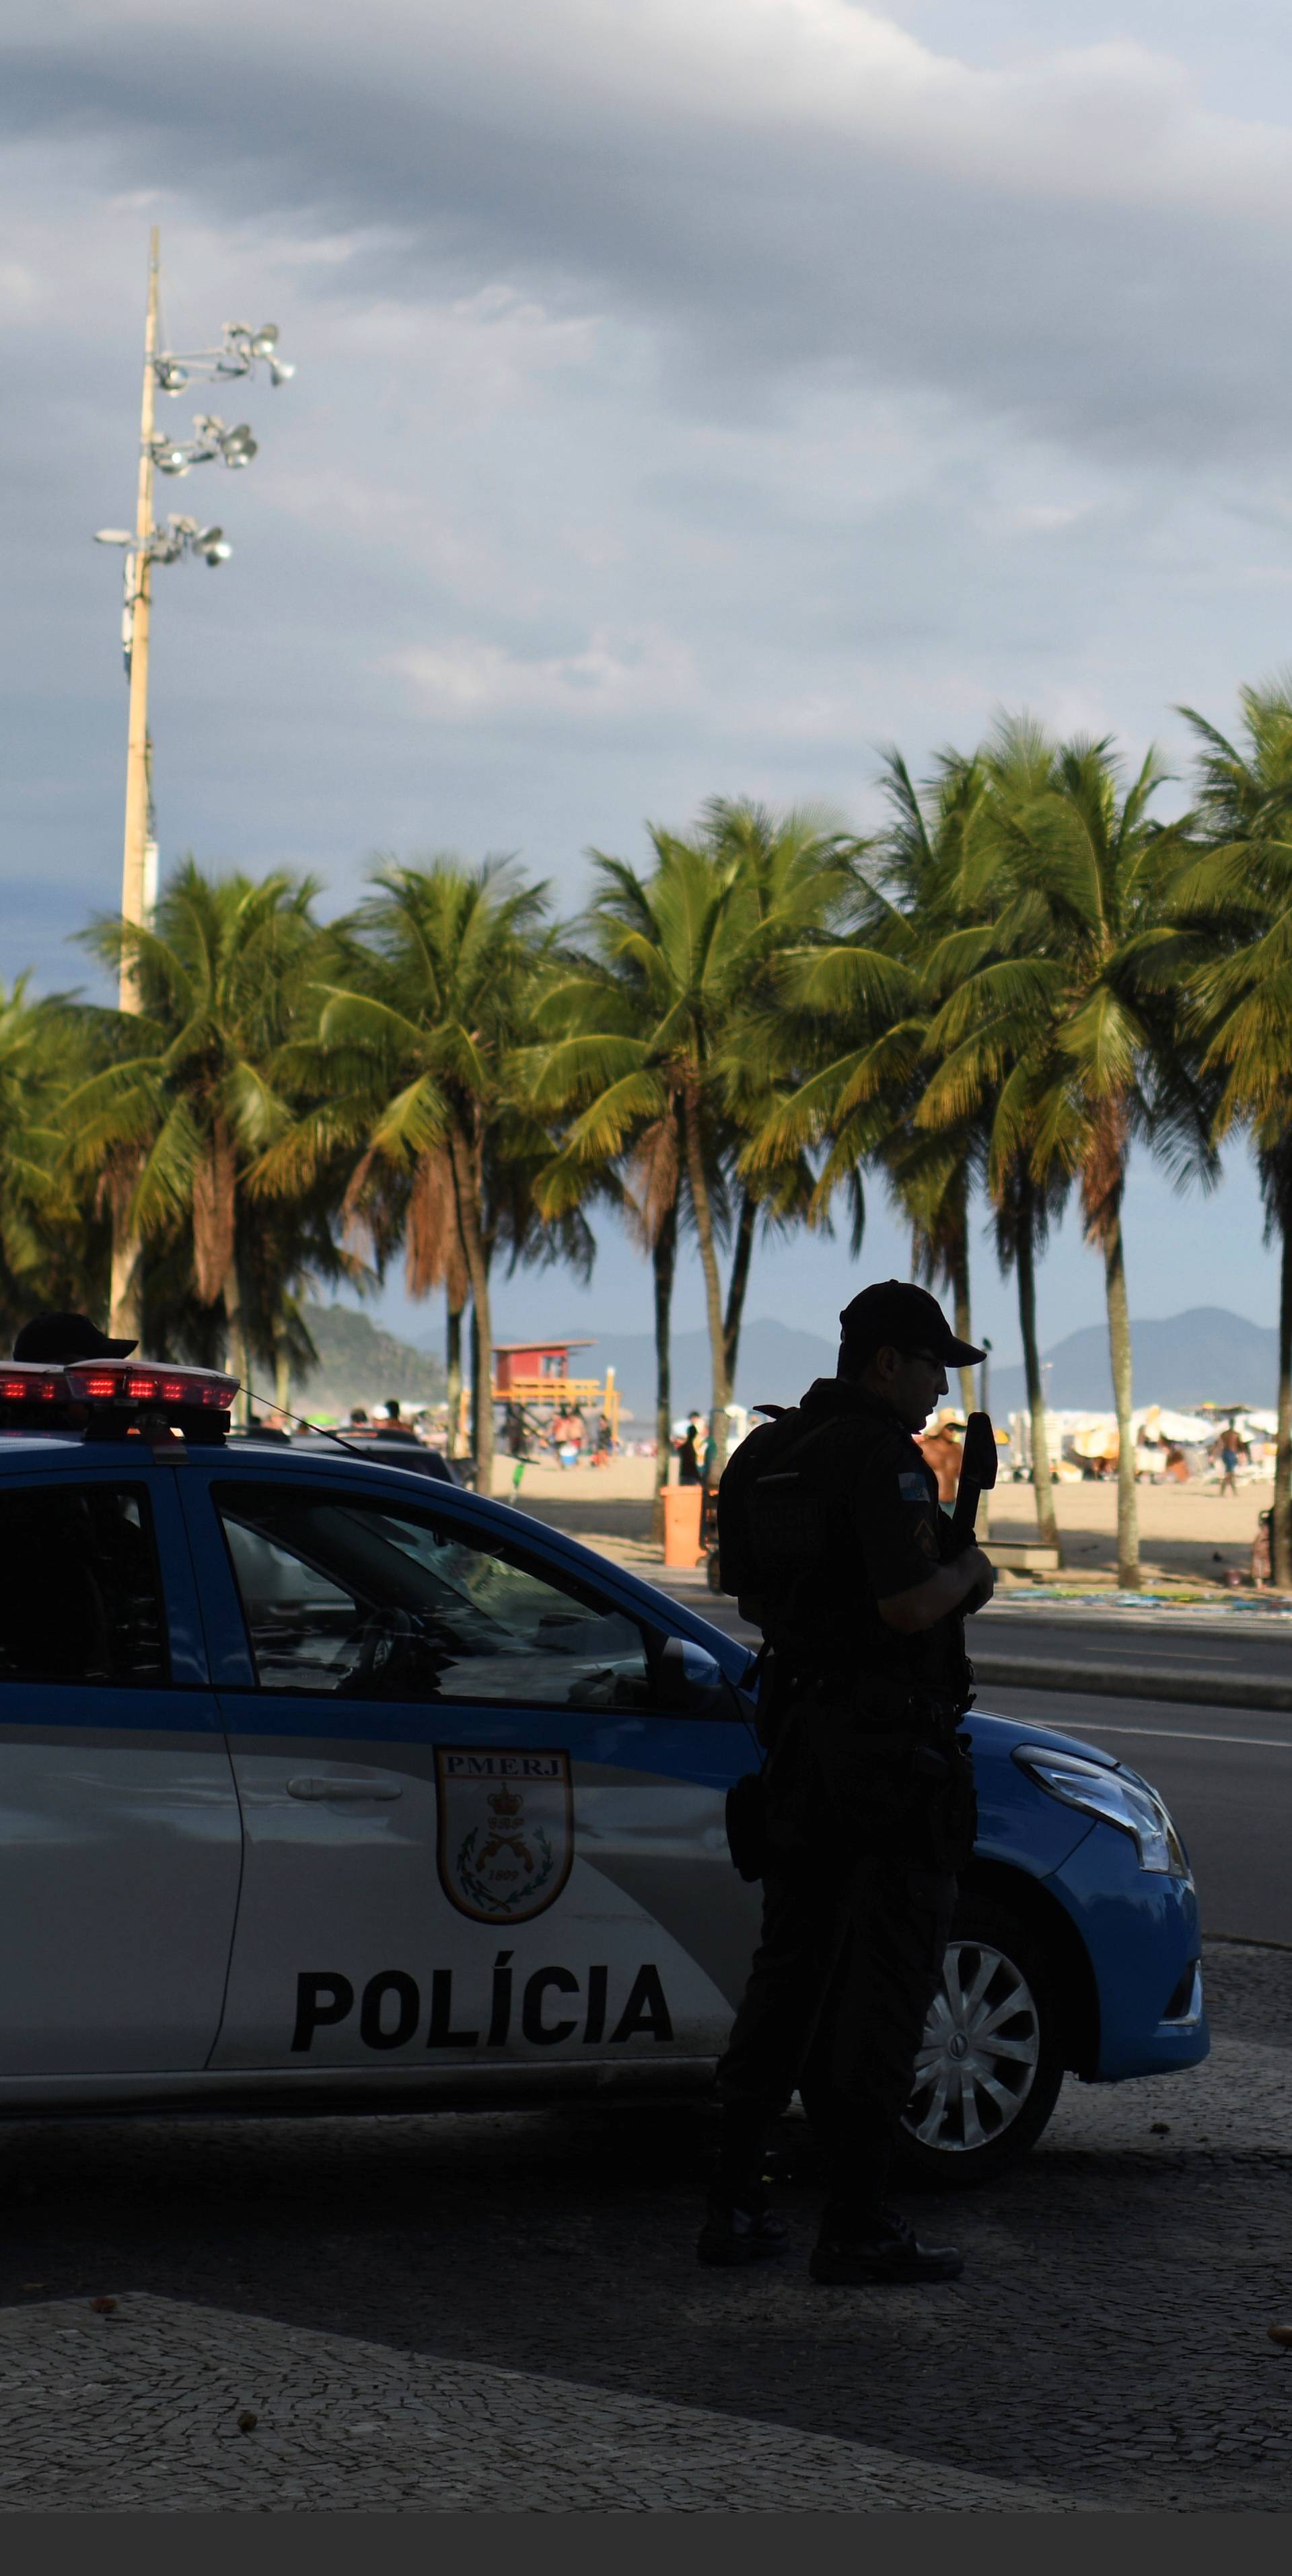 A police officer stands guard at the Copacabana beach in Rio de Janeiro